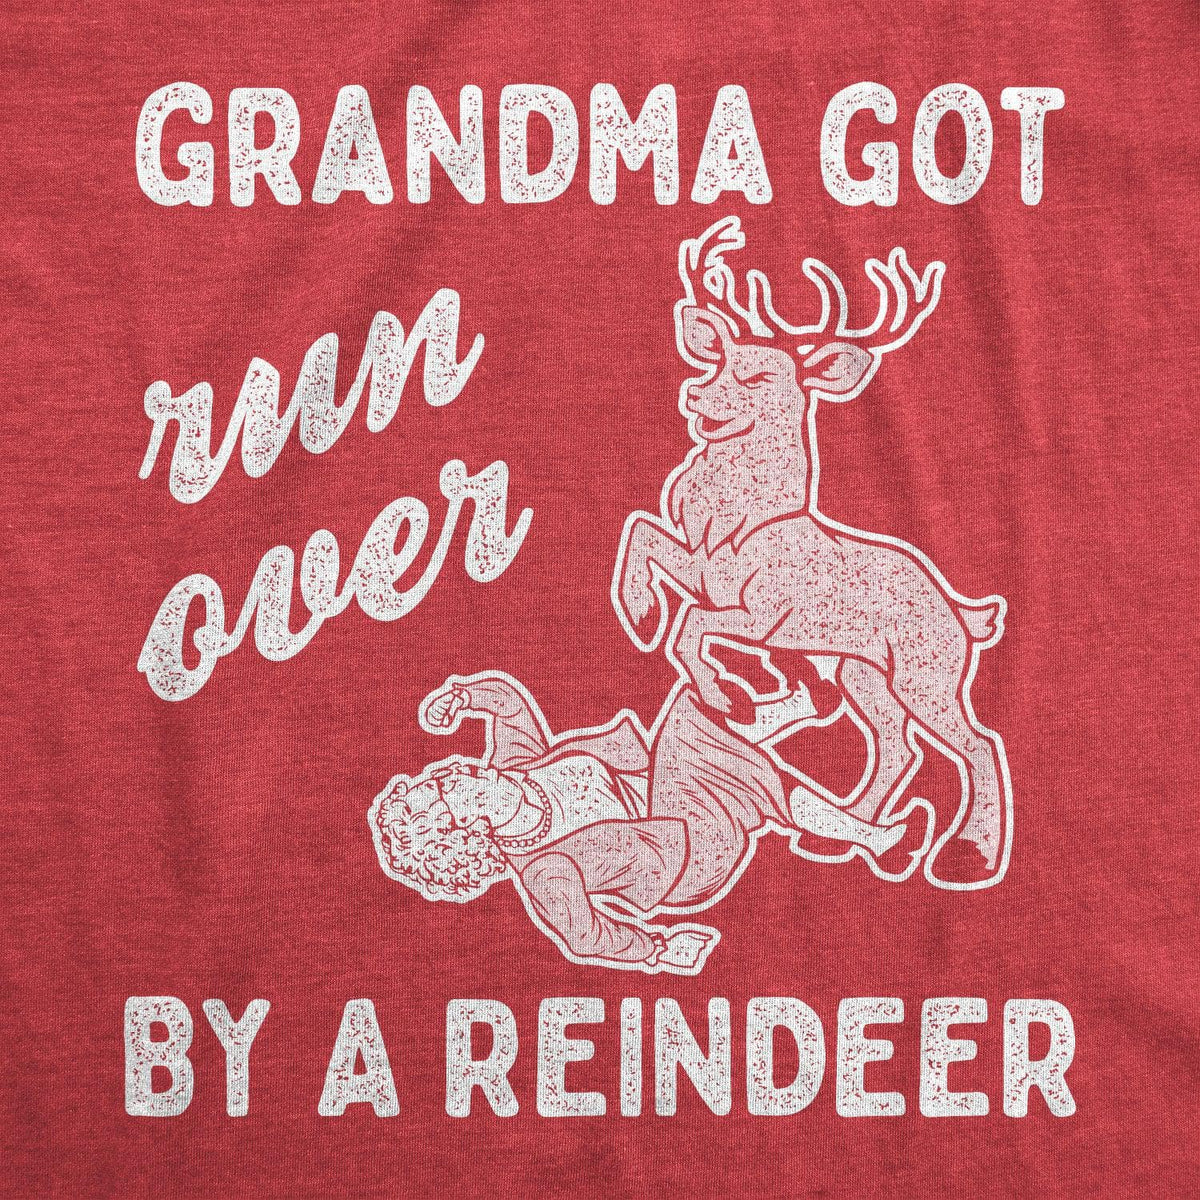 Grandma Got Run Over By A Reindeer Women&#39;s Tshirt  -  Crazy Dog T-Shirts